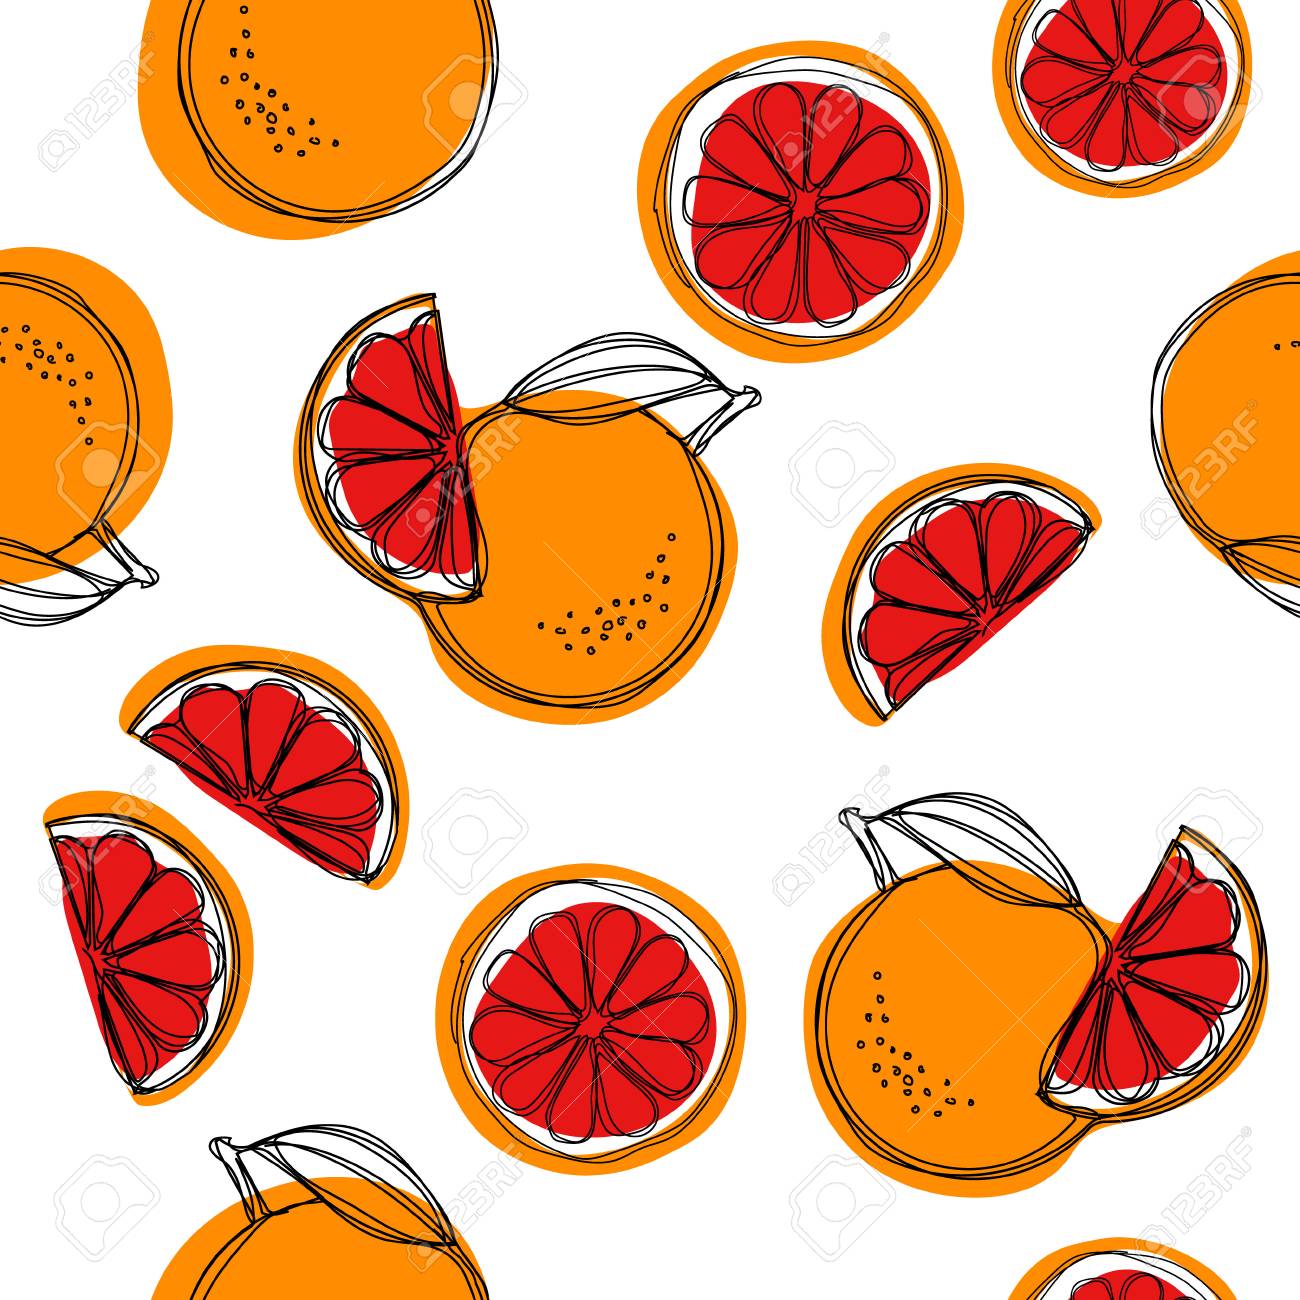 Sicilian Blood Oranges Seamless Pattern On White Background